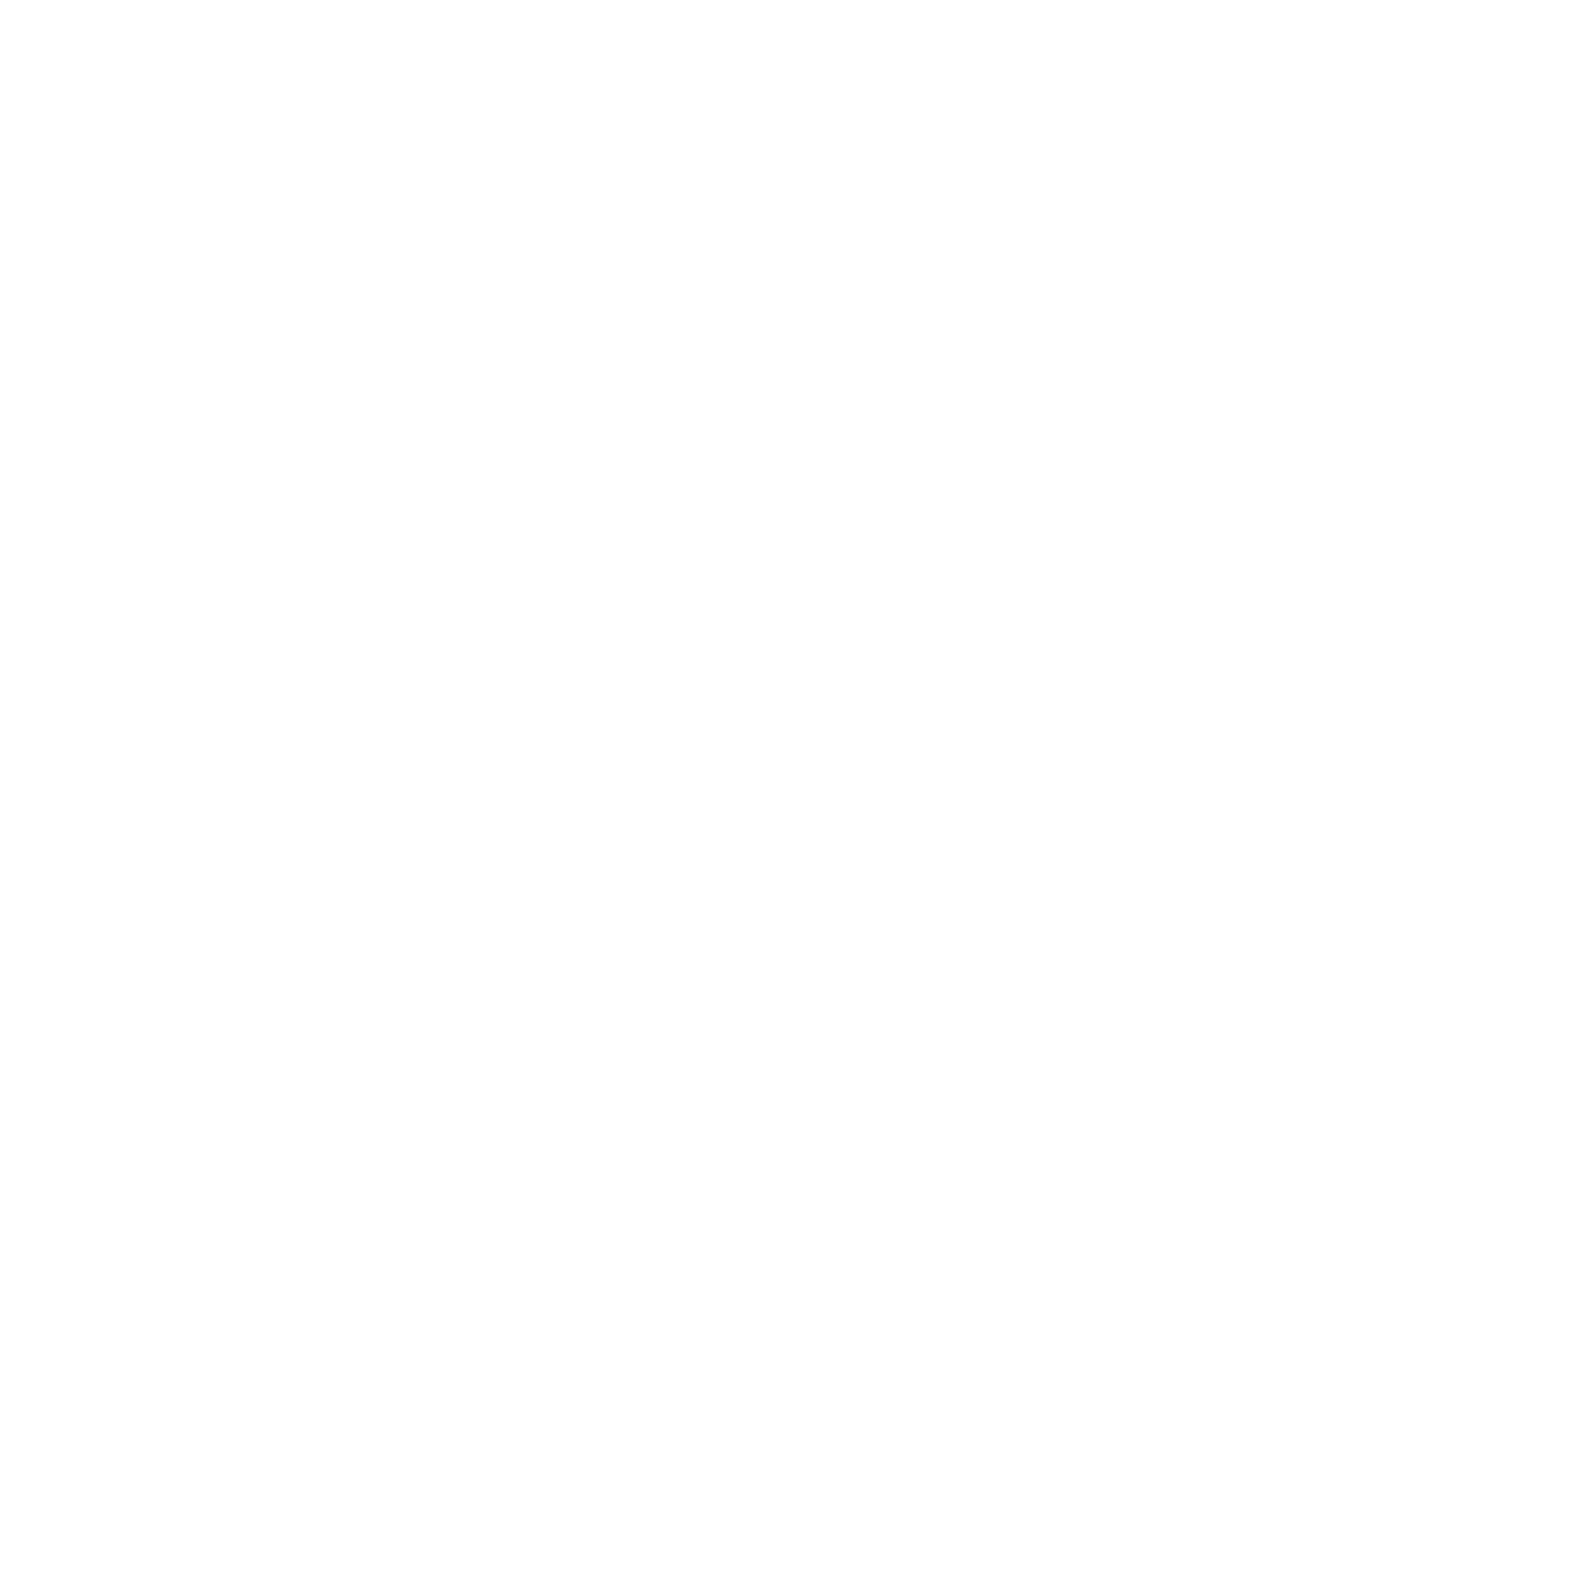 Food & Beverage icon